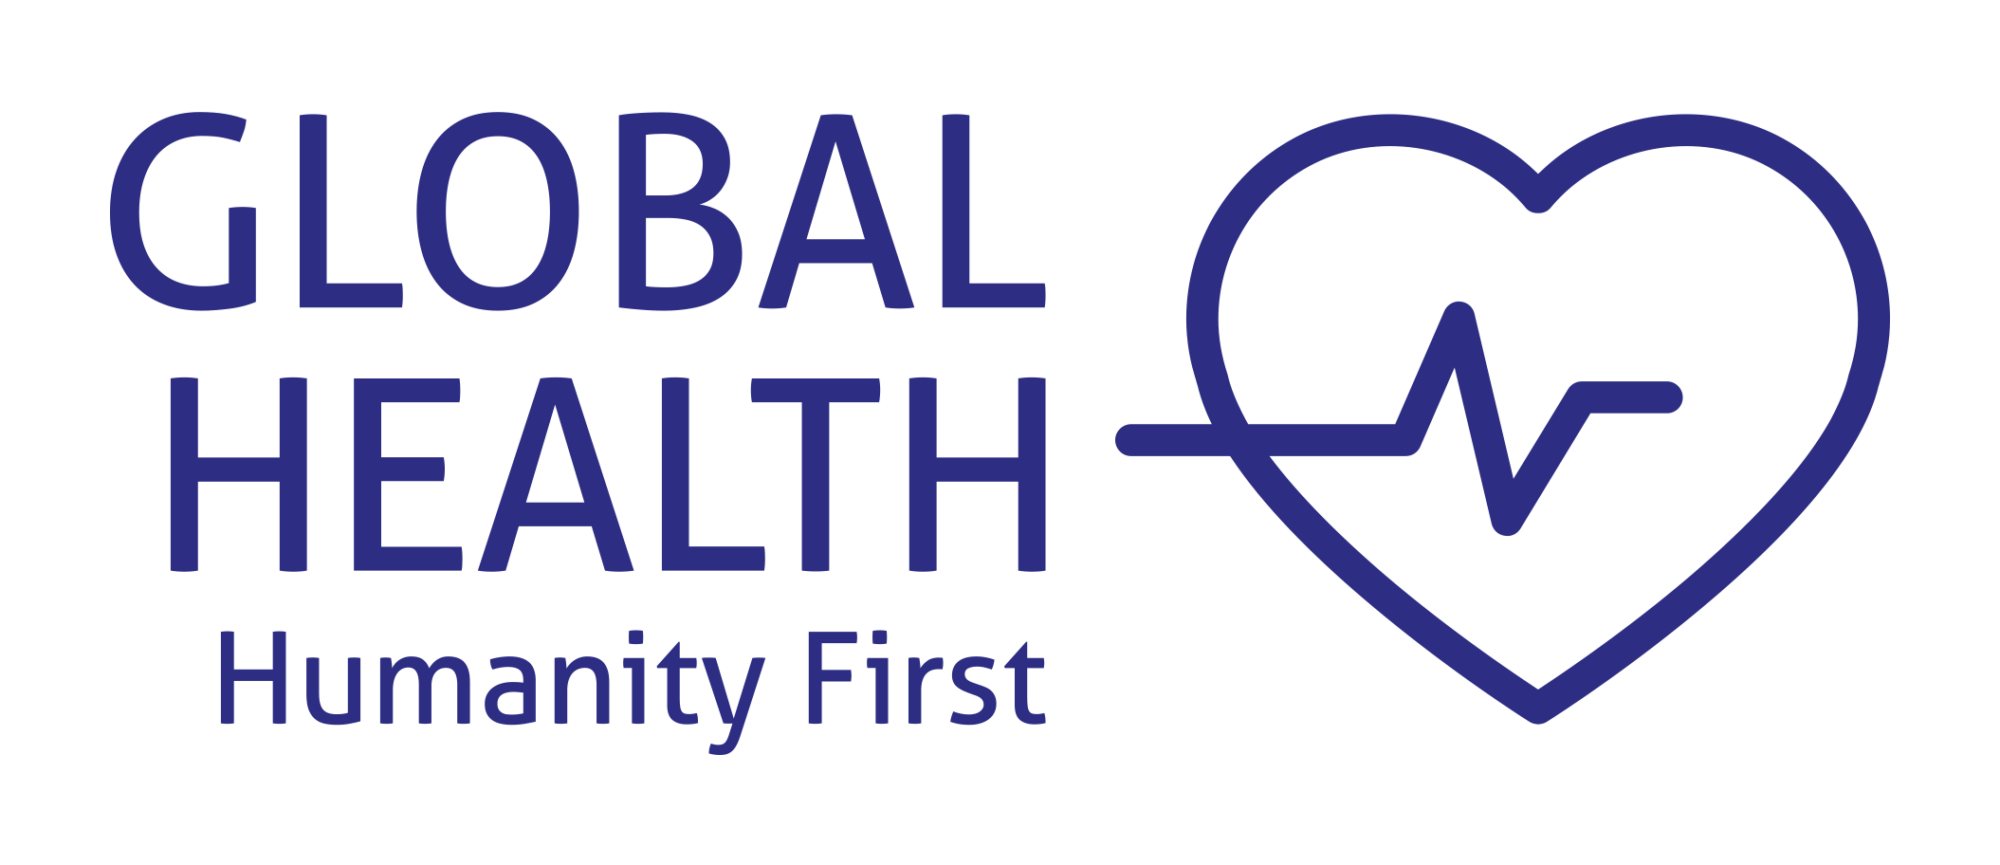 Humanity First Global Health logo